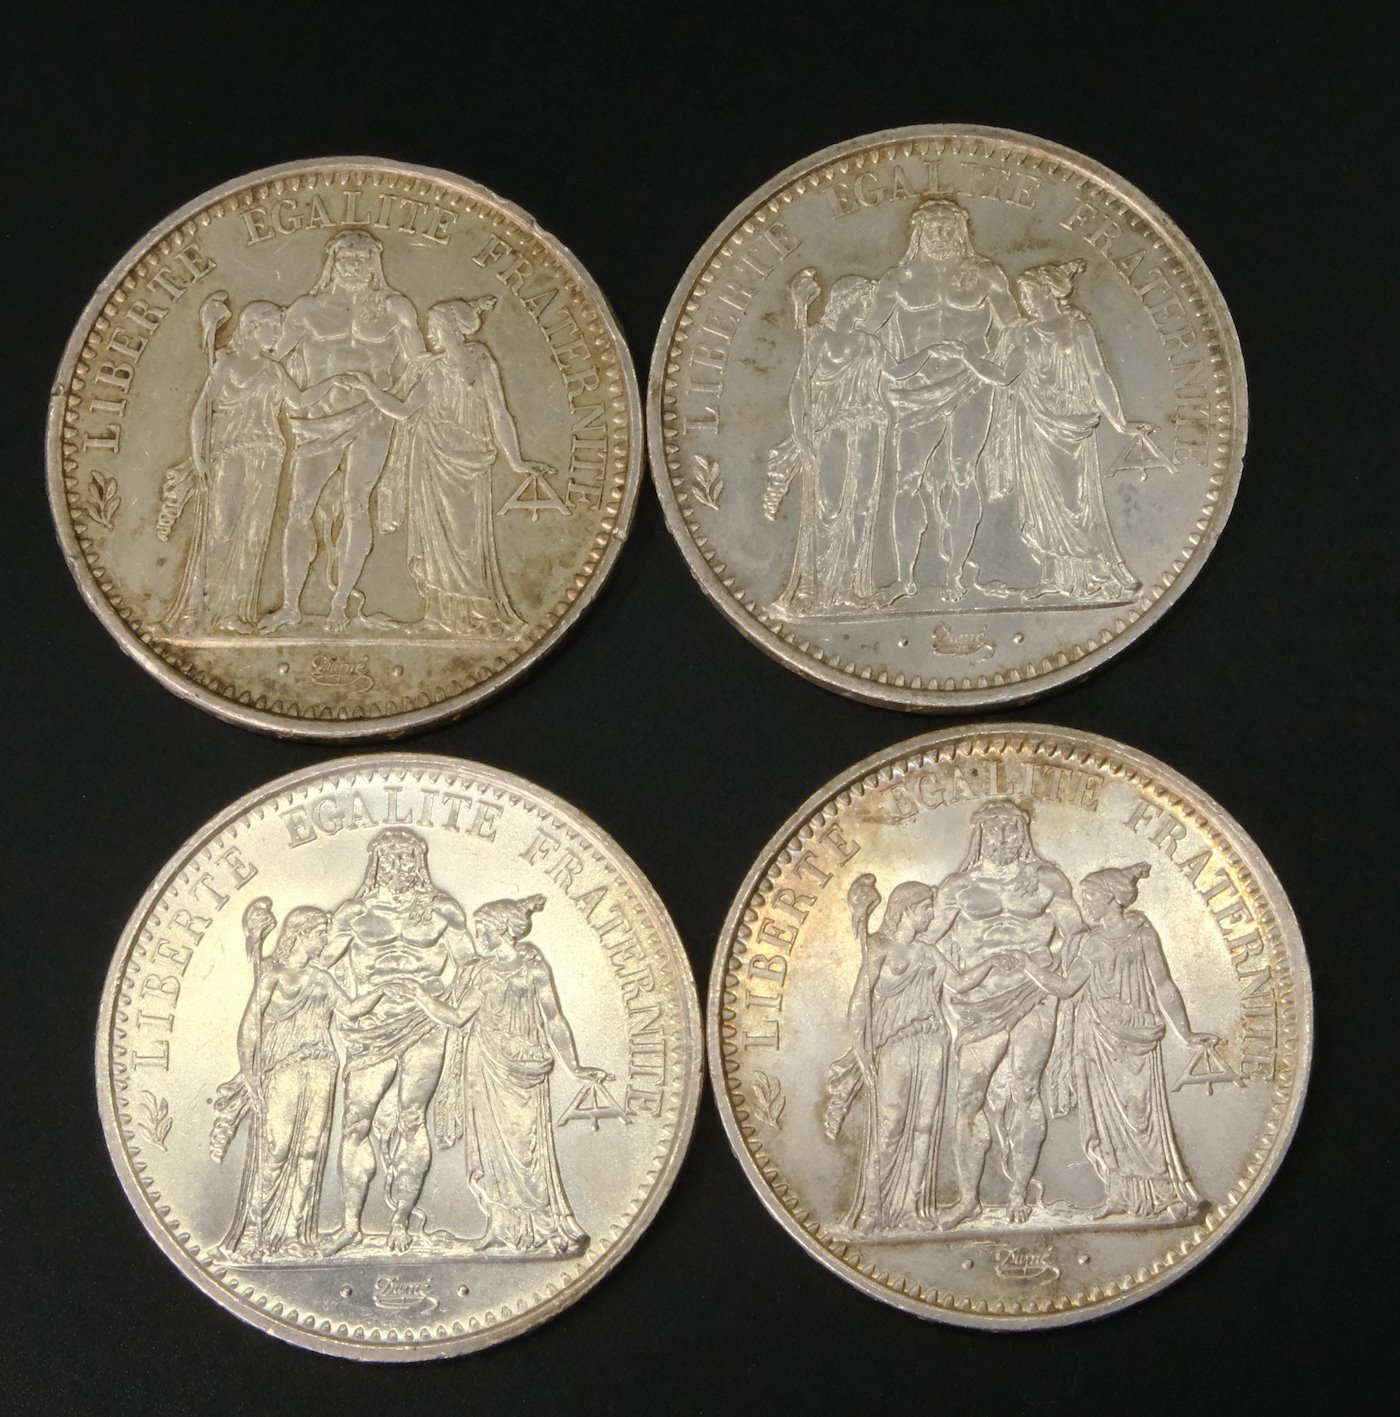 Mince - SADA stříbro 4 kusů 10 Frank Francie 1965-68, Stříbro 900/1000, hrubá hmotnost 1 ks 25g